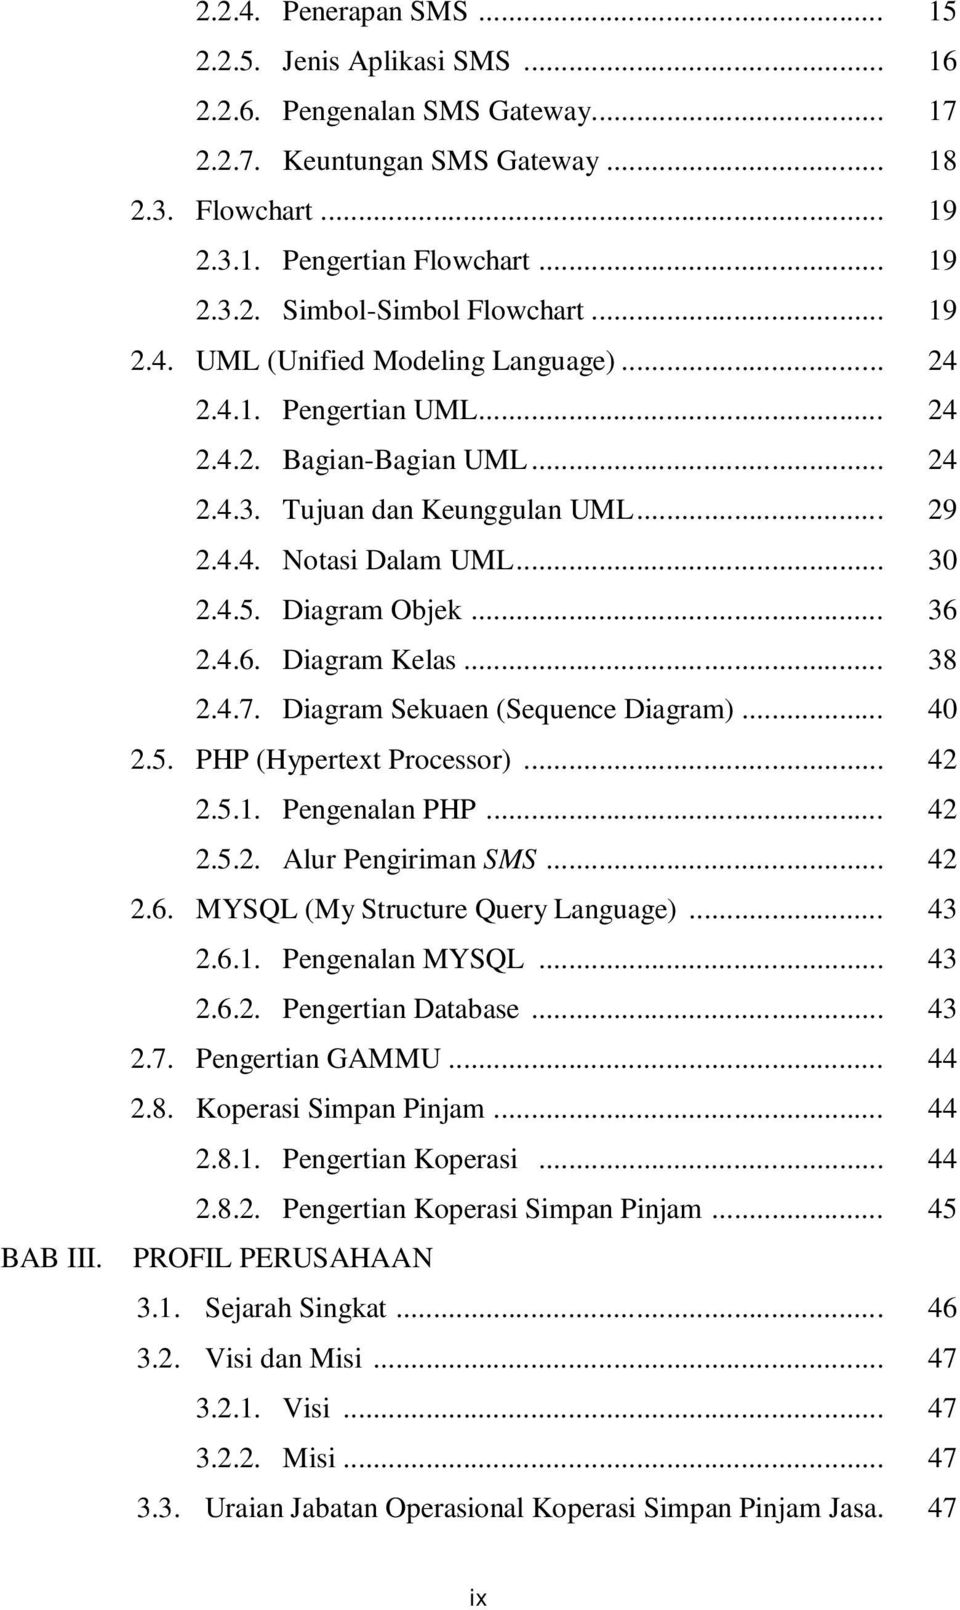 .. 36 2.4.6. Diagram Kelas... 38 2.4.7. Diagram Sekuaen (Sequence Diagram)... 40 2.5. PHP (Hypertext Processor)... 42 2.5.1. Pengenalan PHP... 42 2.5.2. Alur Pengiriman SMS... 42 2.6. MYSQL (My Structure Query Language).